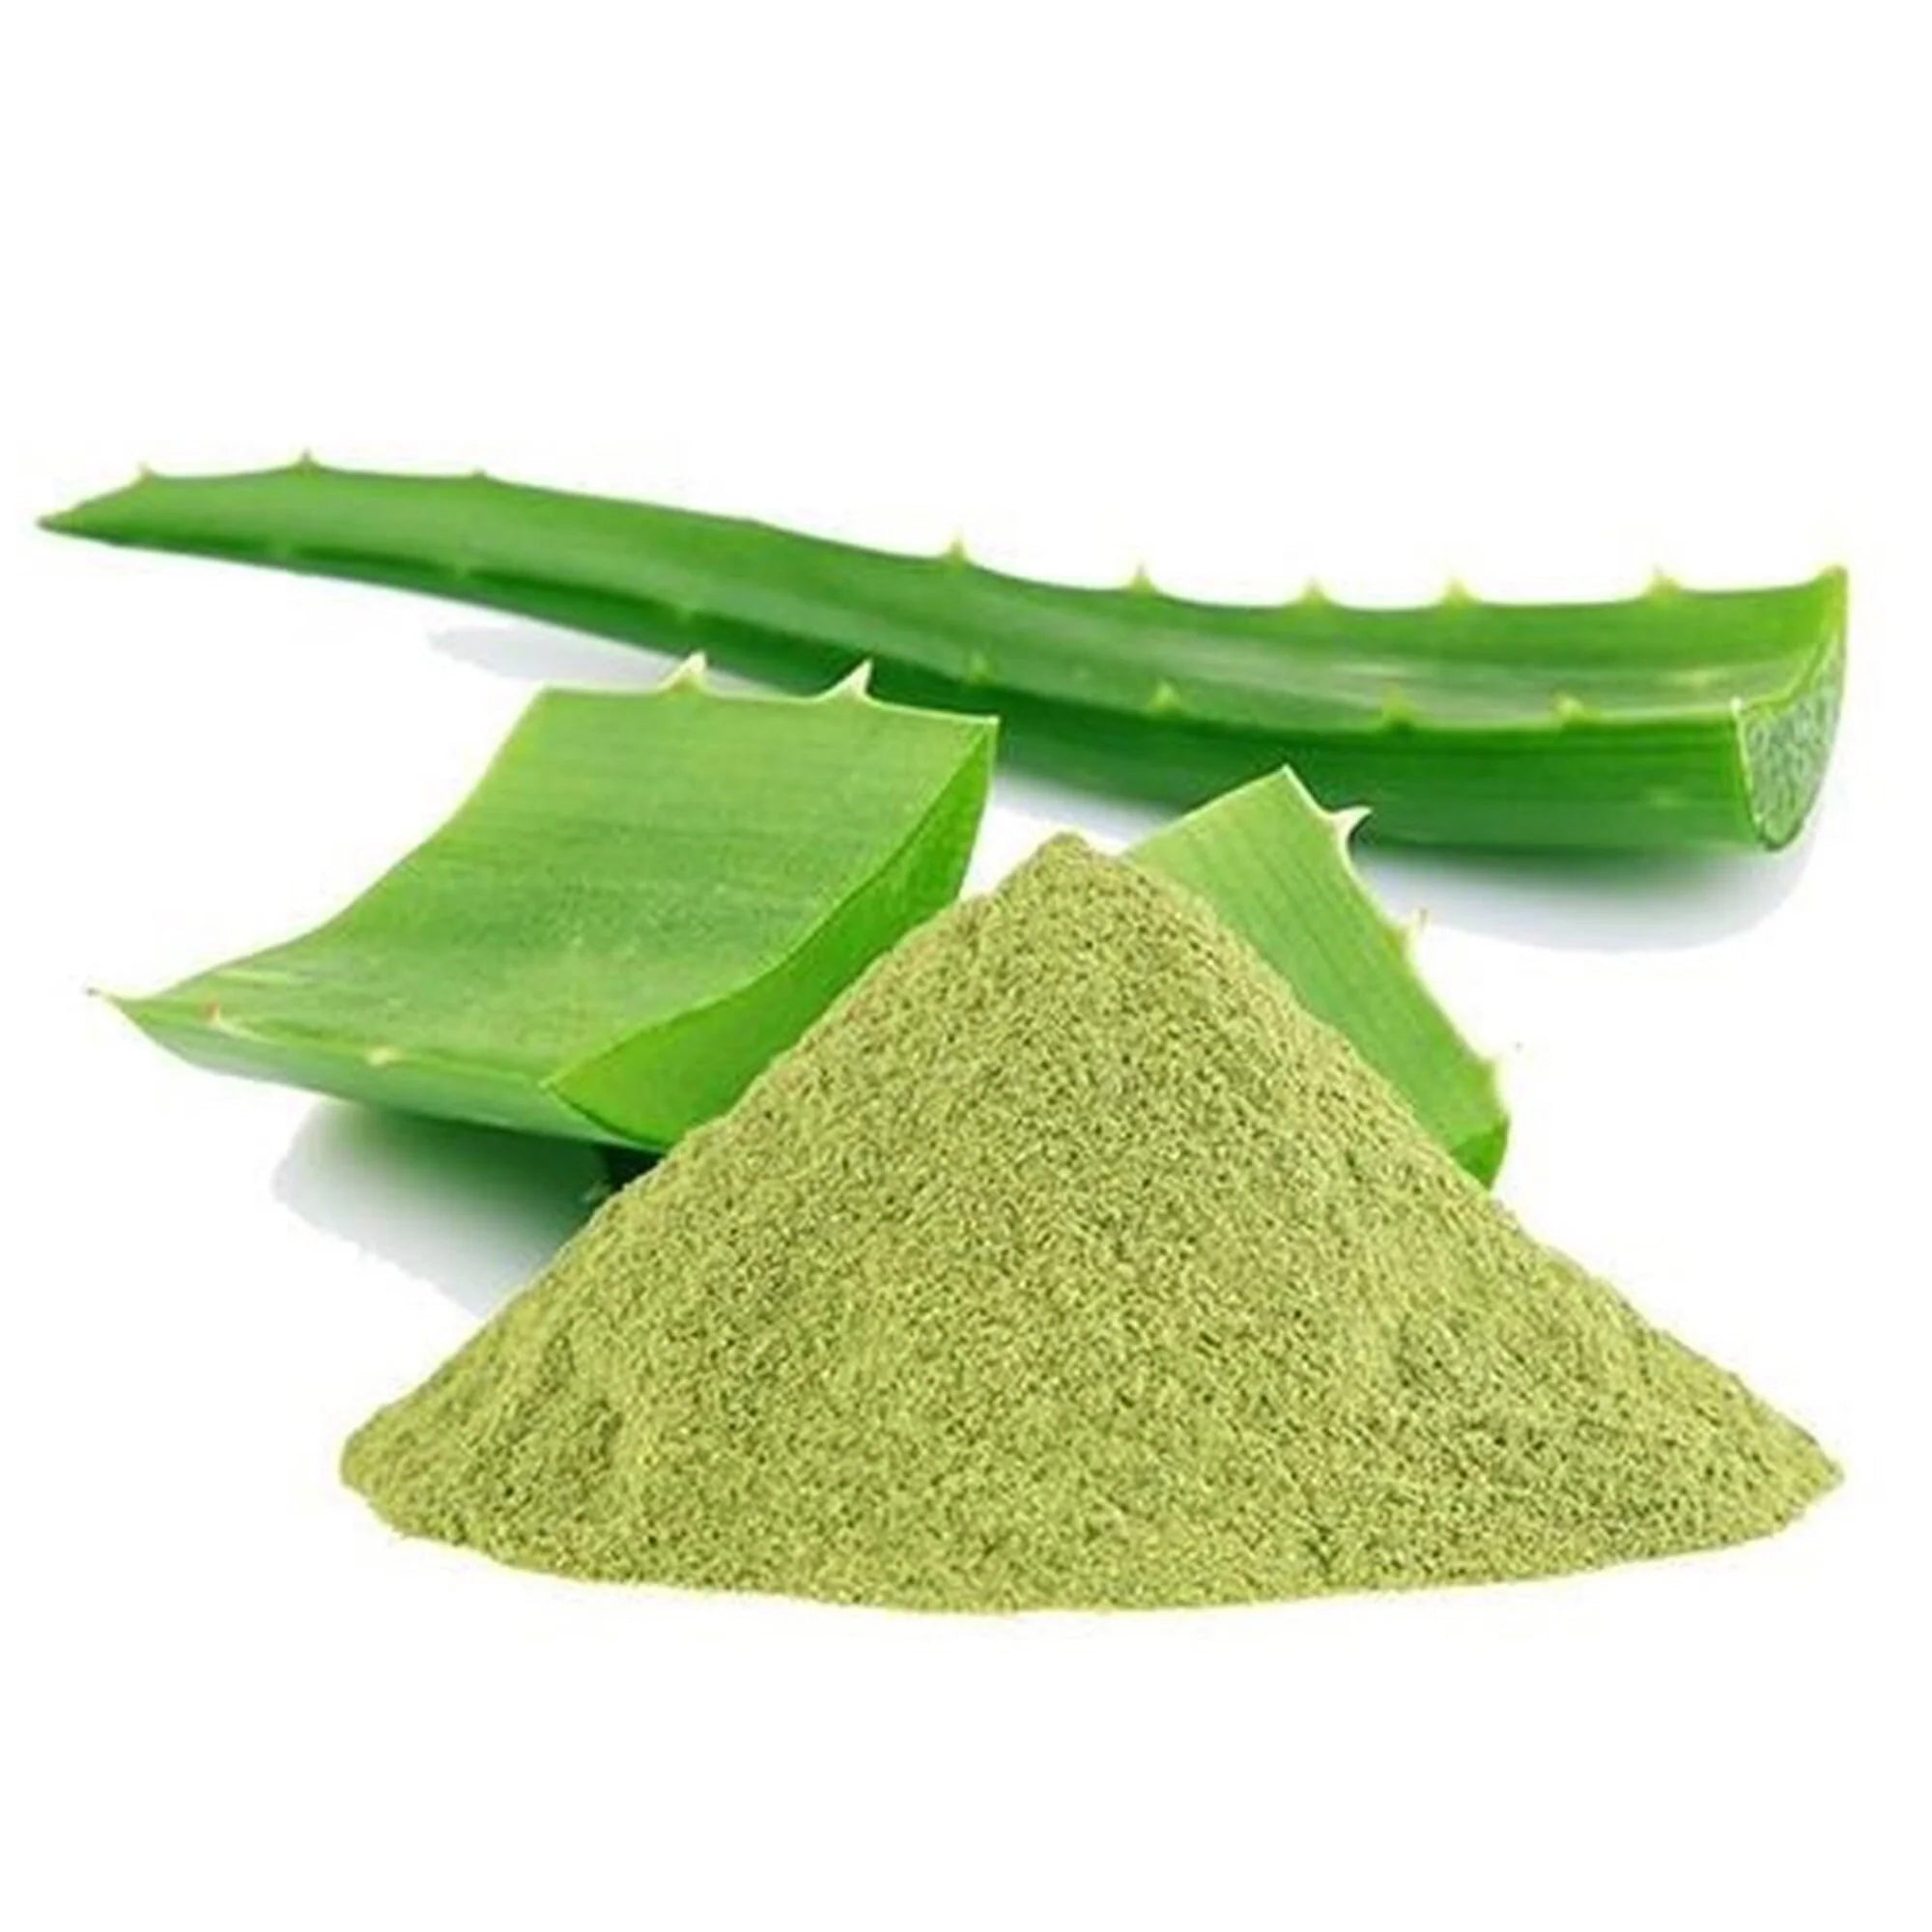 Aloe vera Powder Benefits: Top Benefits of Aloe vera Powder